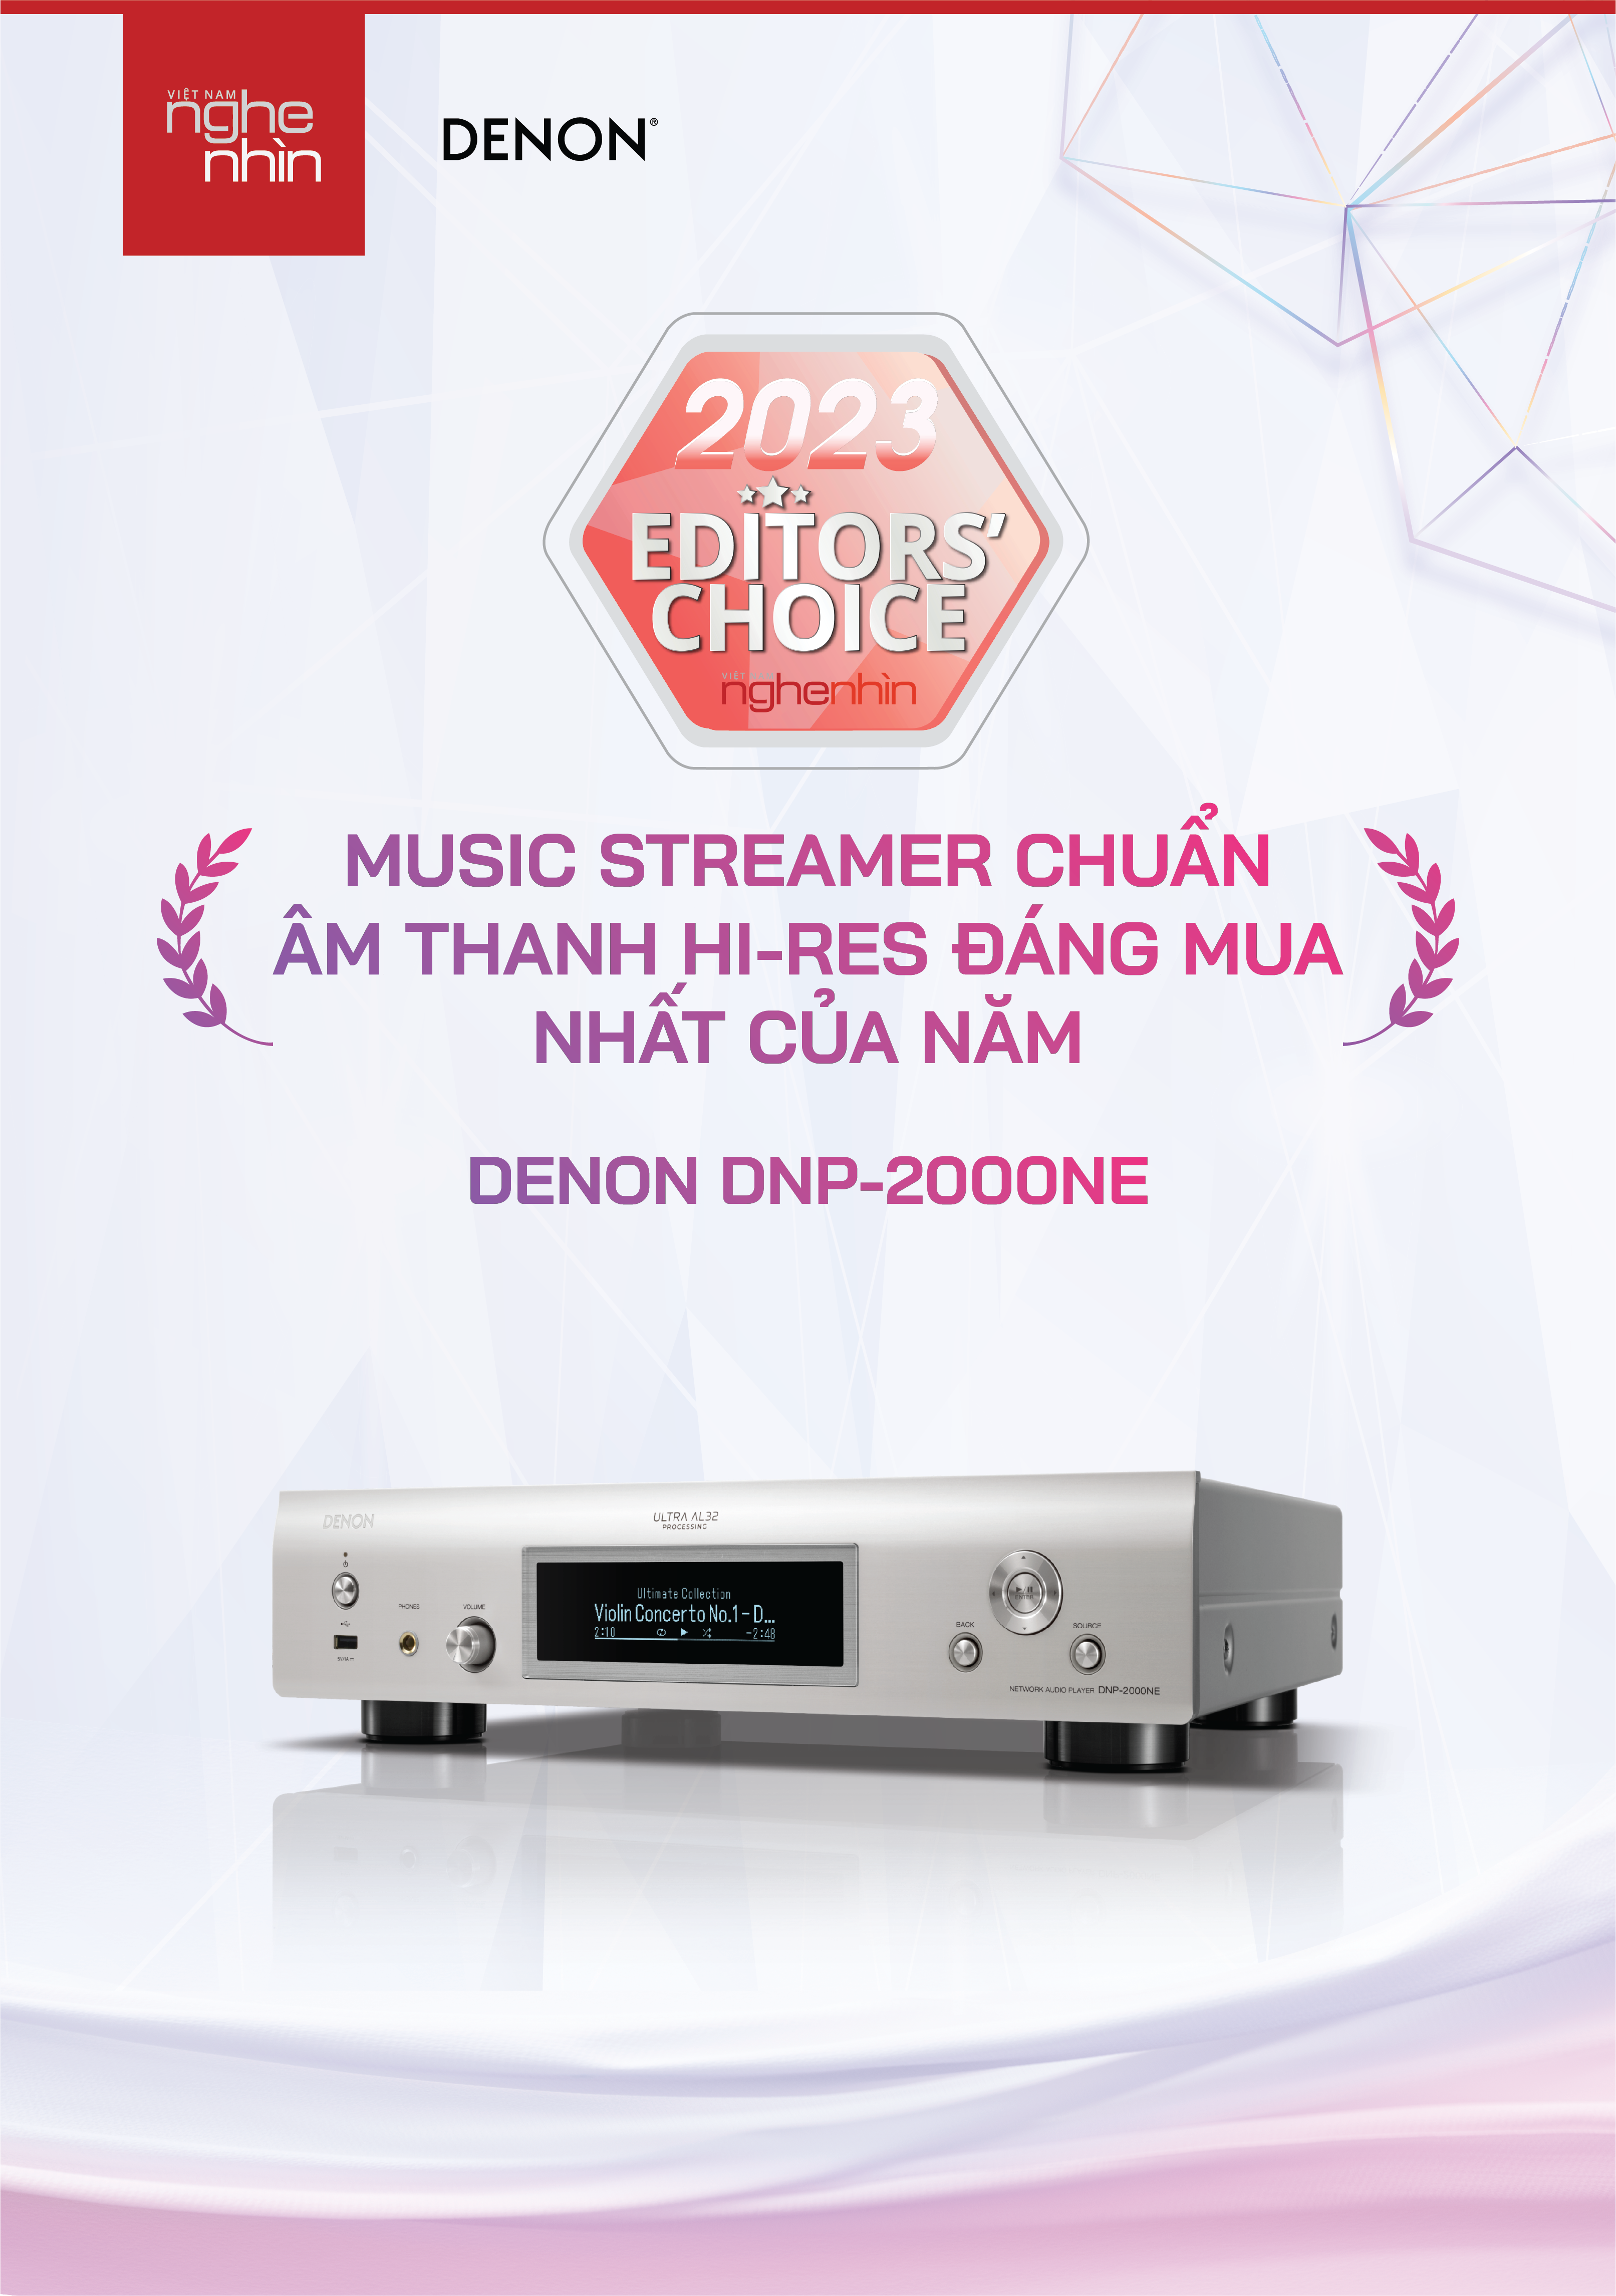 nn_ec2023_music_streamer_chuan_am_thanh_hi-res_dang_mua_nhat_cua_nam_poster.png (4.89 MB)